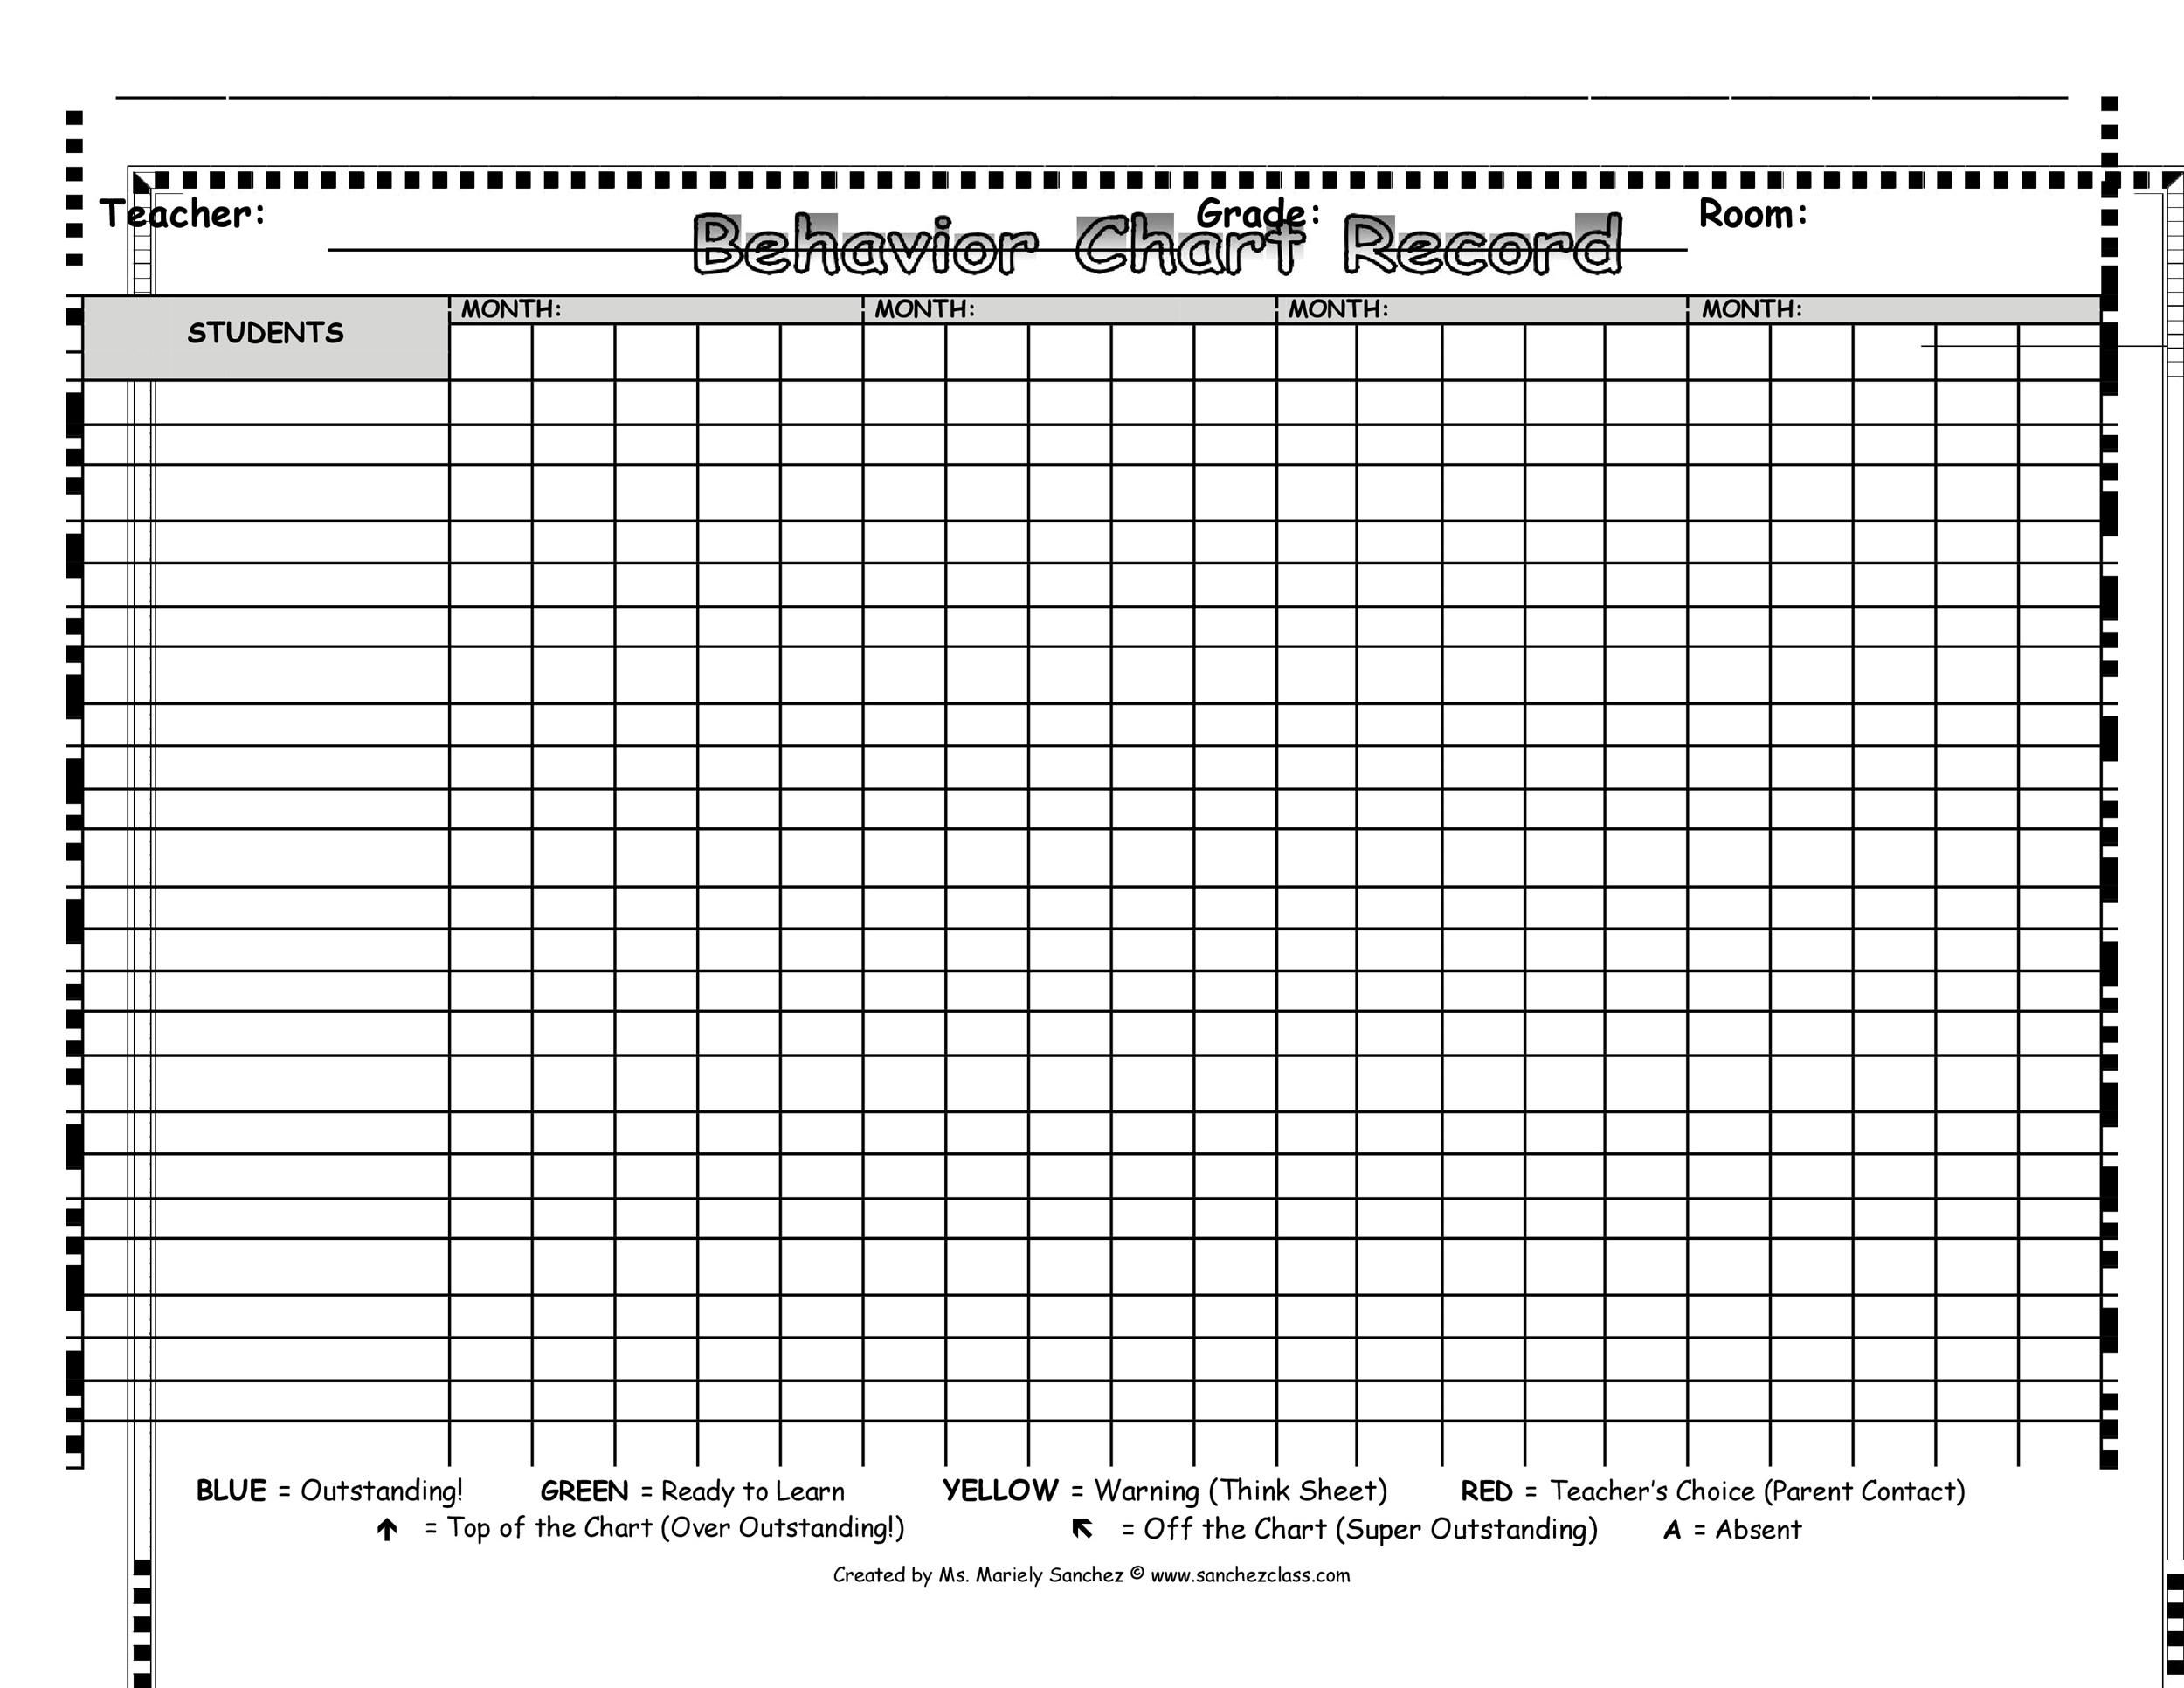 42 Printable Behavior Chart Templates [for Kids] ᐅ Templatelab